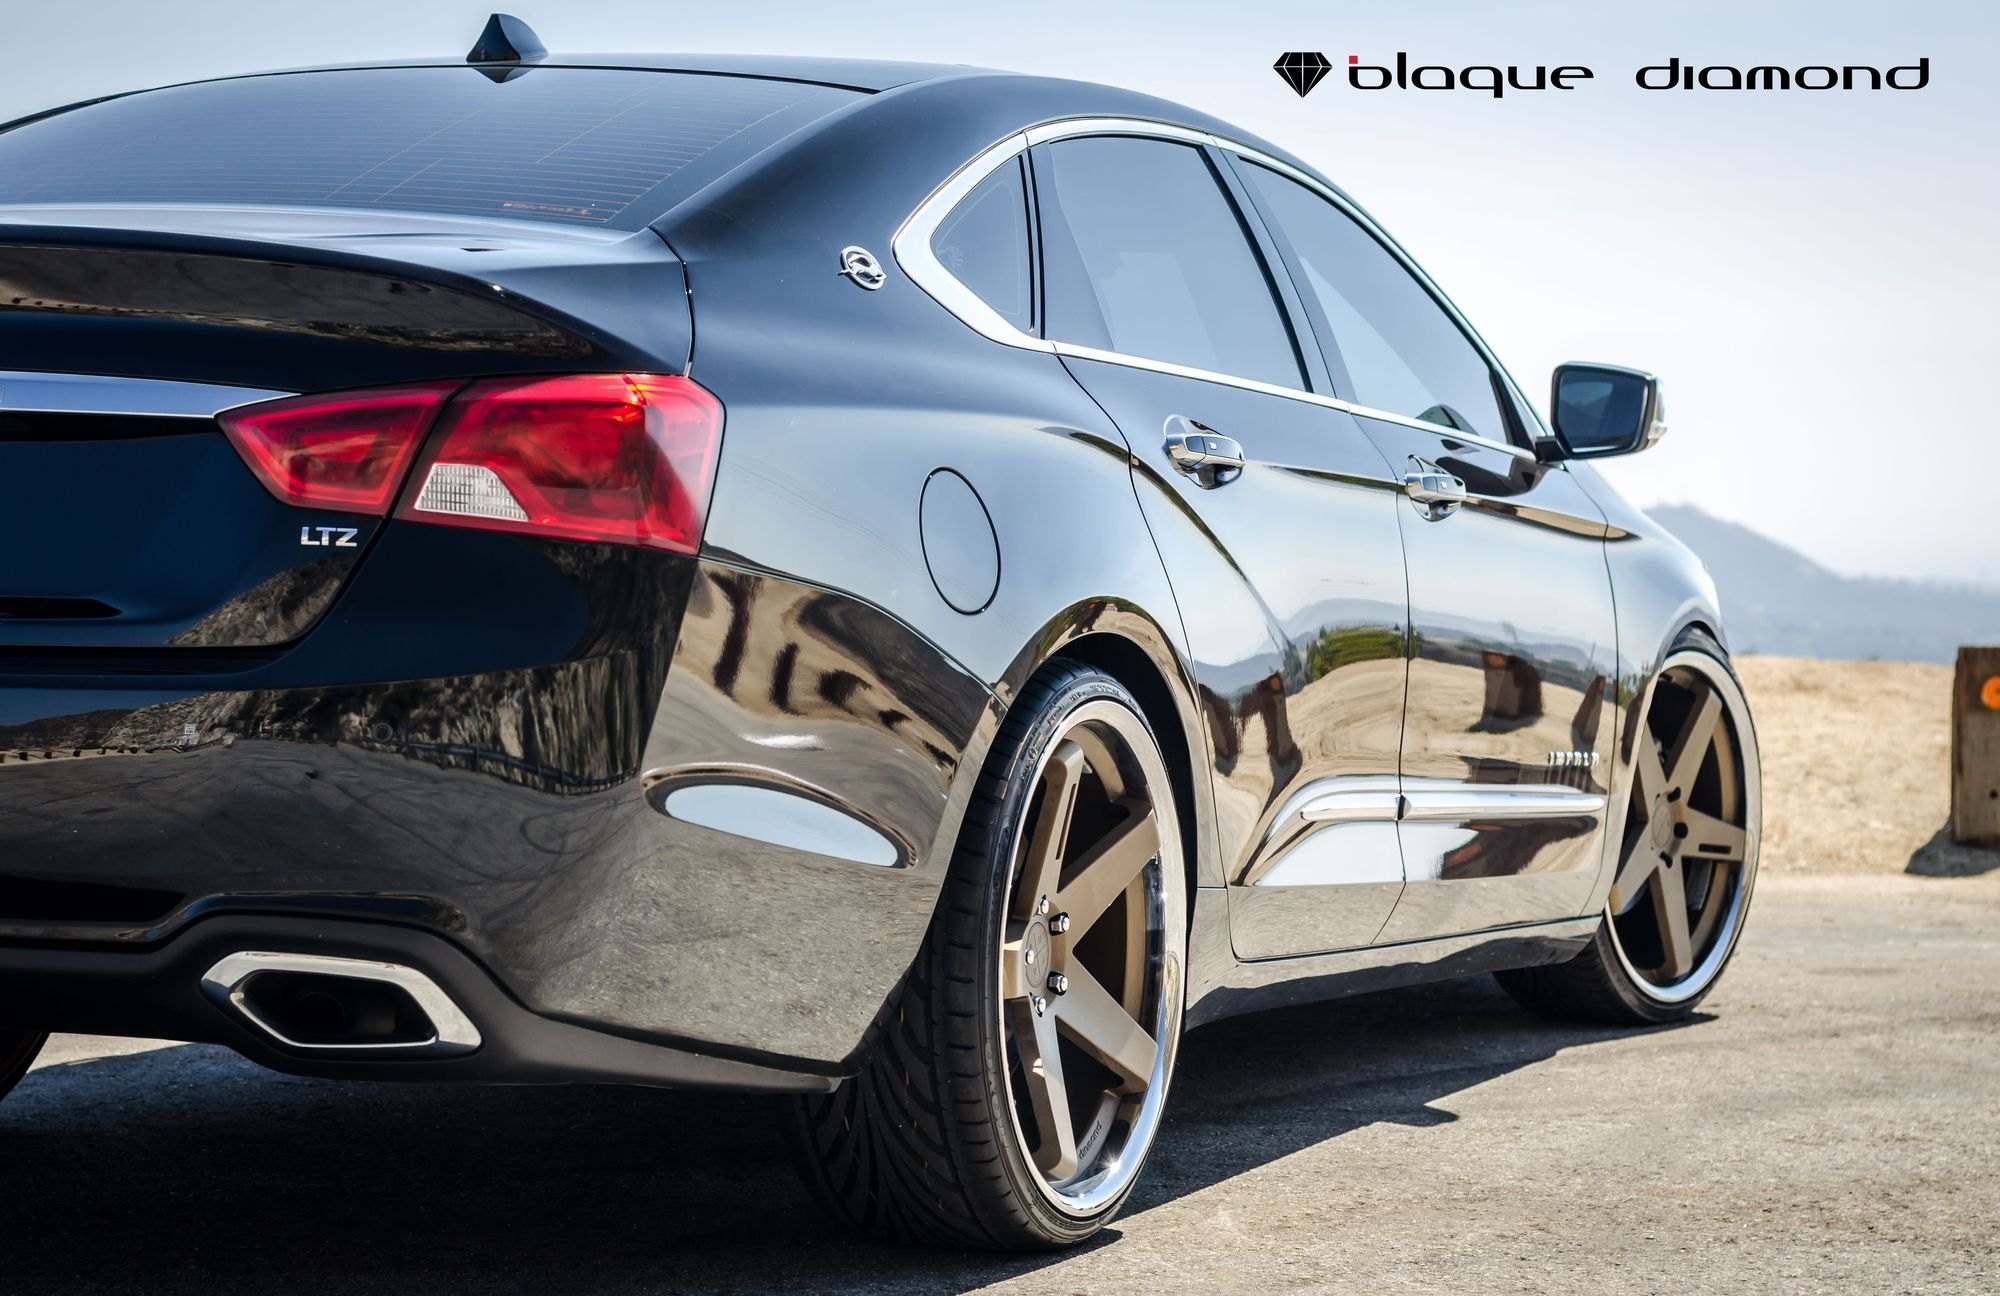 Black Chevy Impala with Bronze Blaque Diamond Wheels - Photo by Blaque Diamond